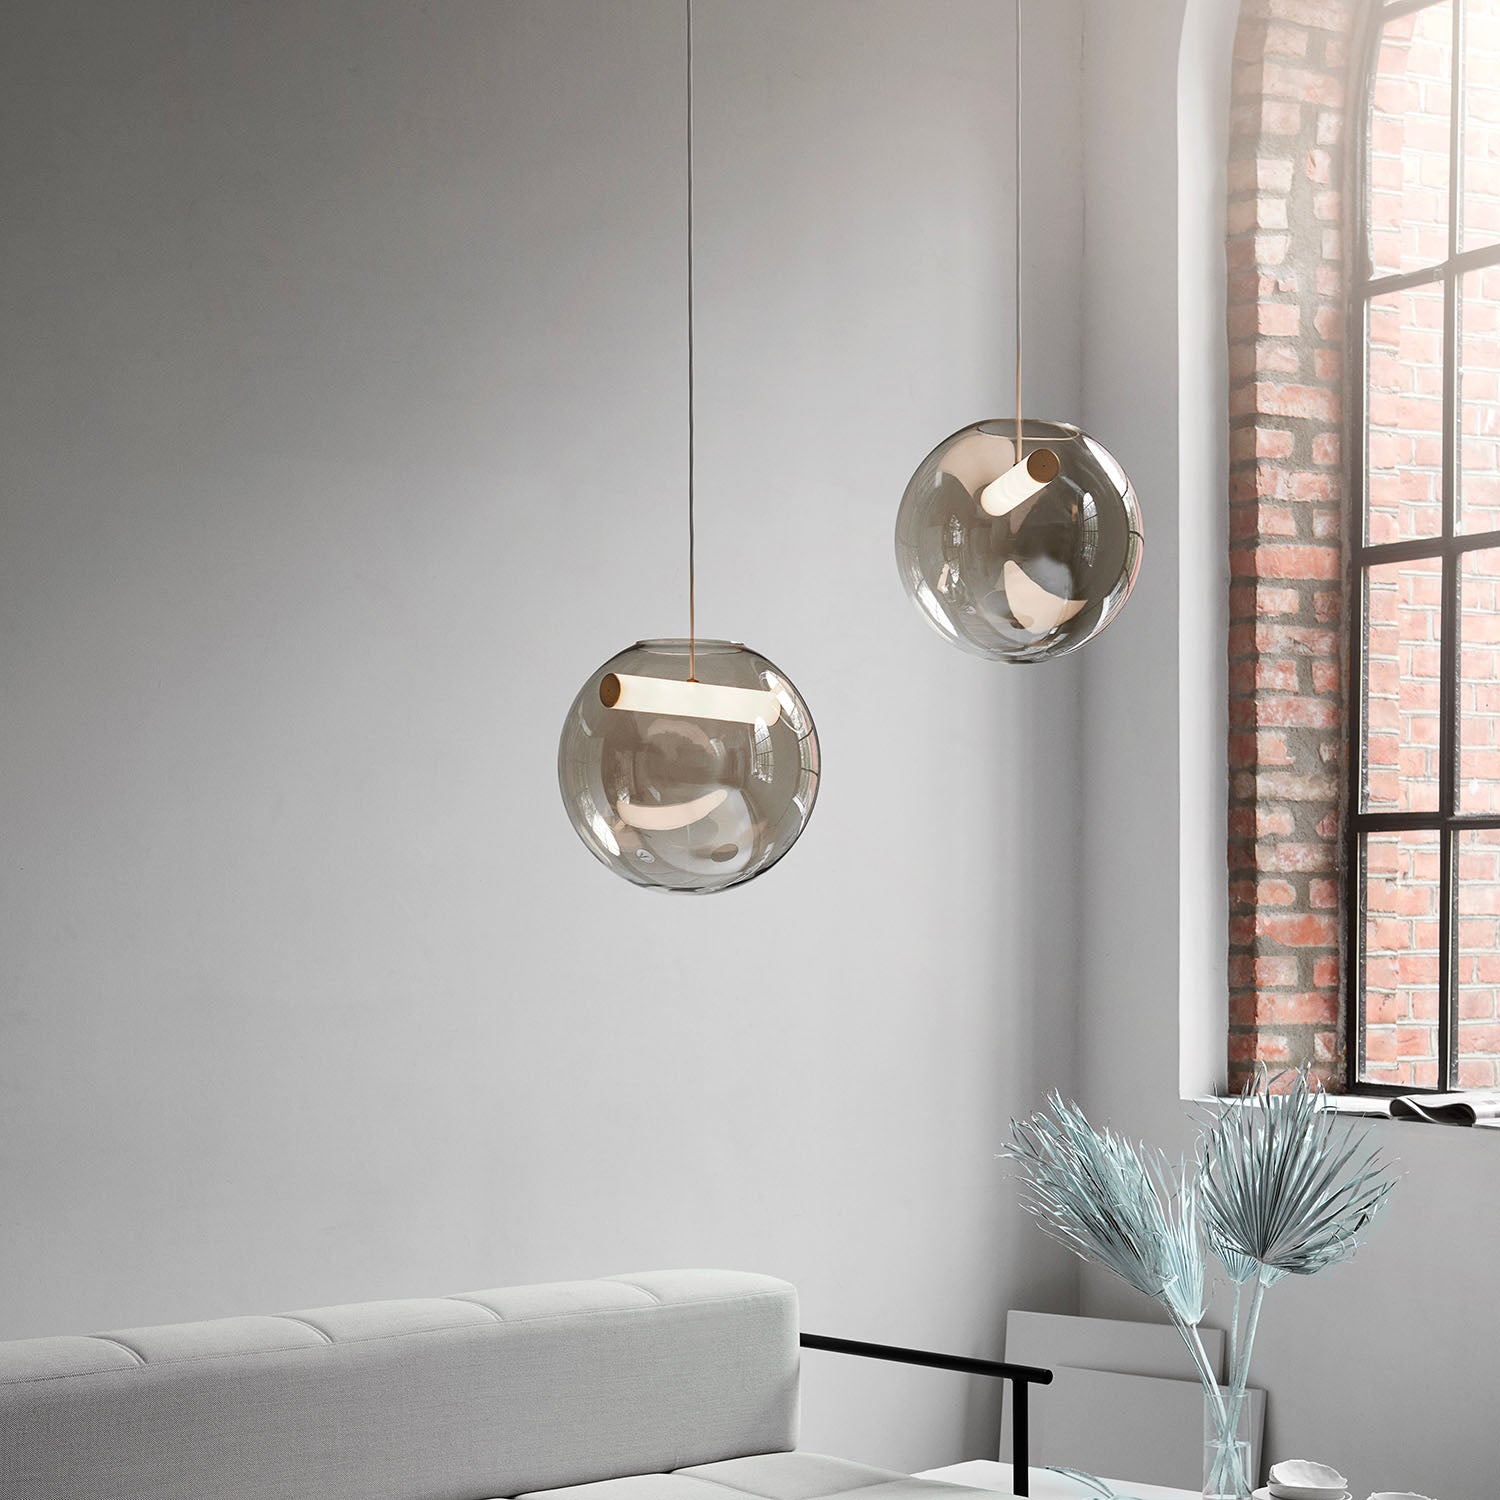 REVEAL - Smoked glass ball pendant light, integrated LED tube, Italian design